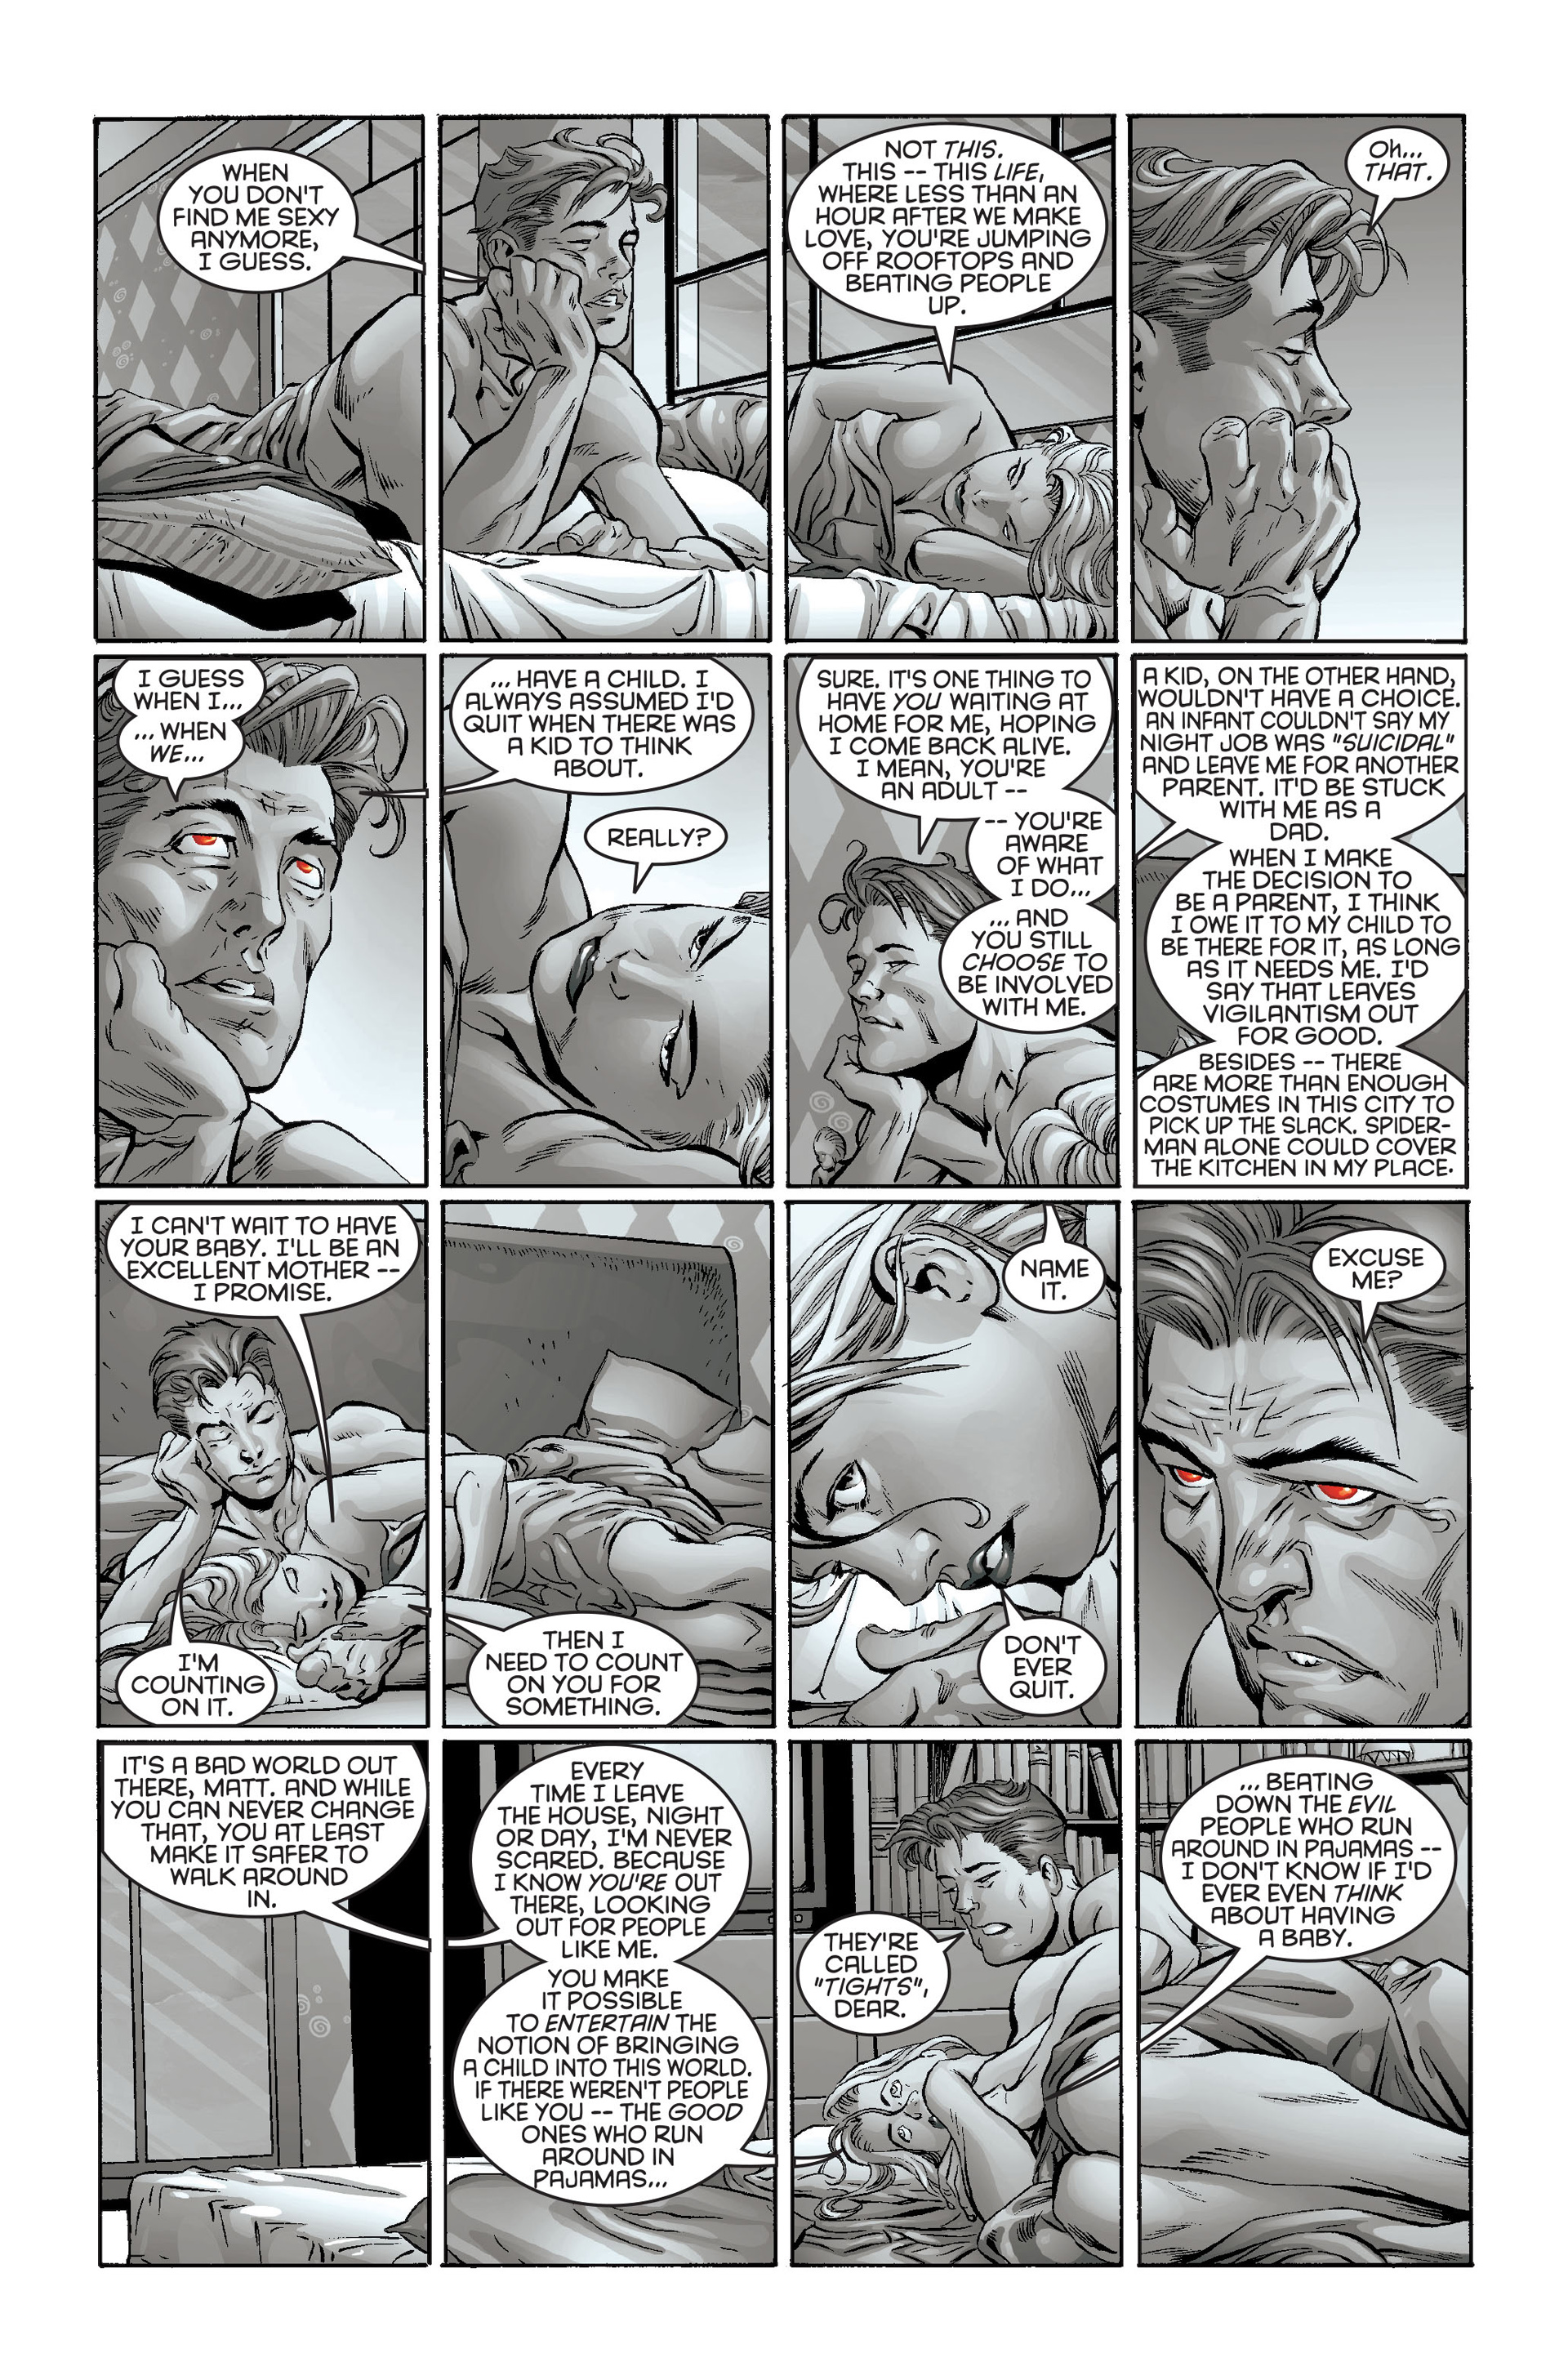 Daredevil (1998) 6 Page 6